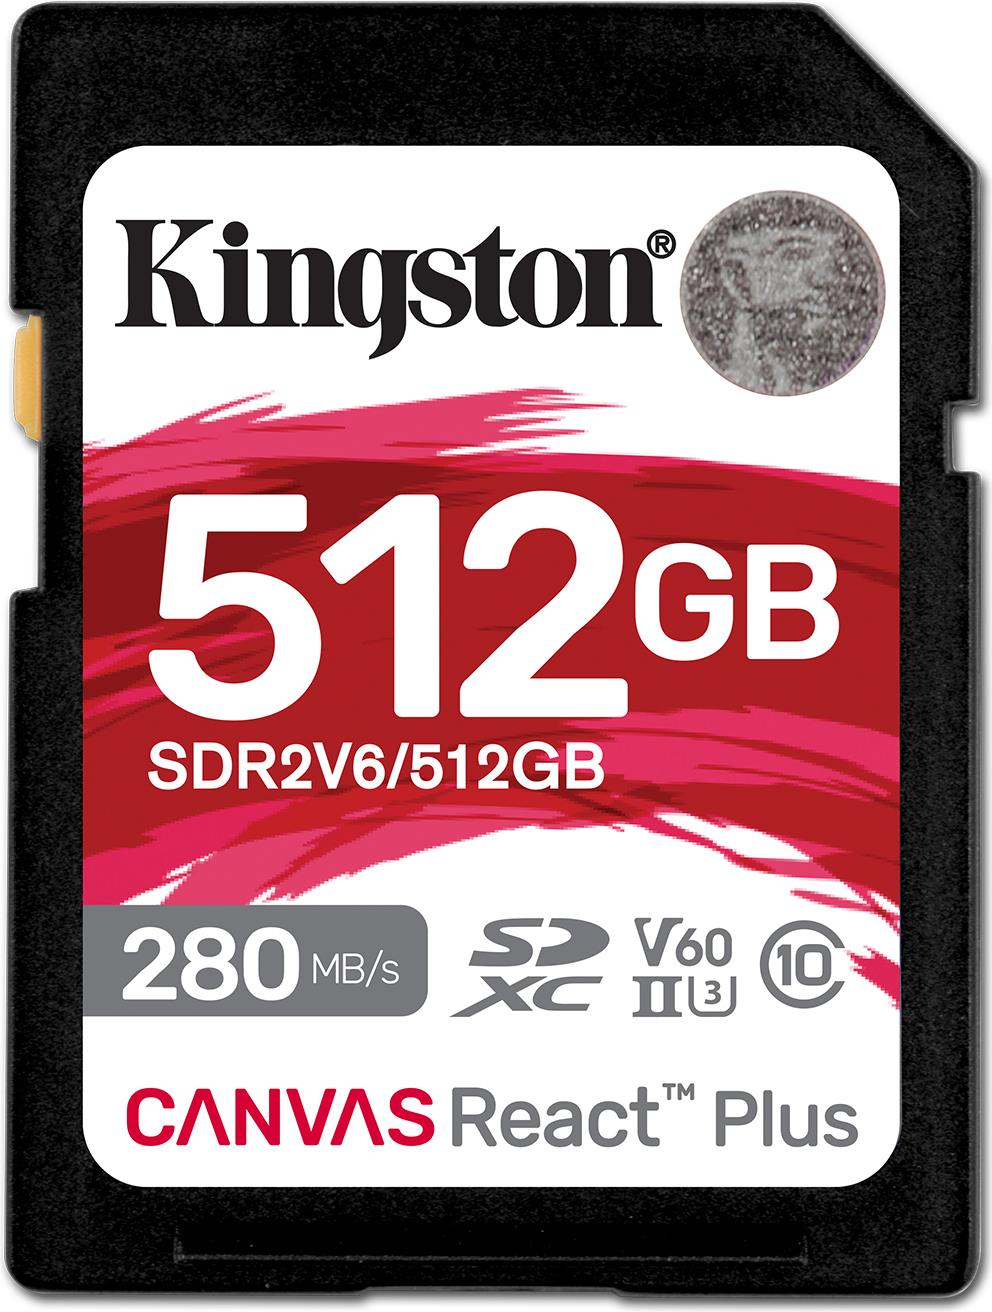 Kingston Technology 512GB Canvas React Plus SDXC UHS-II 280R/150W U3 V60 for Full HD/4K (SDR2V6/512GB)